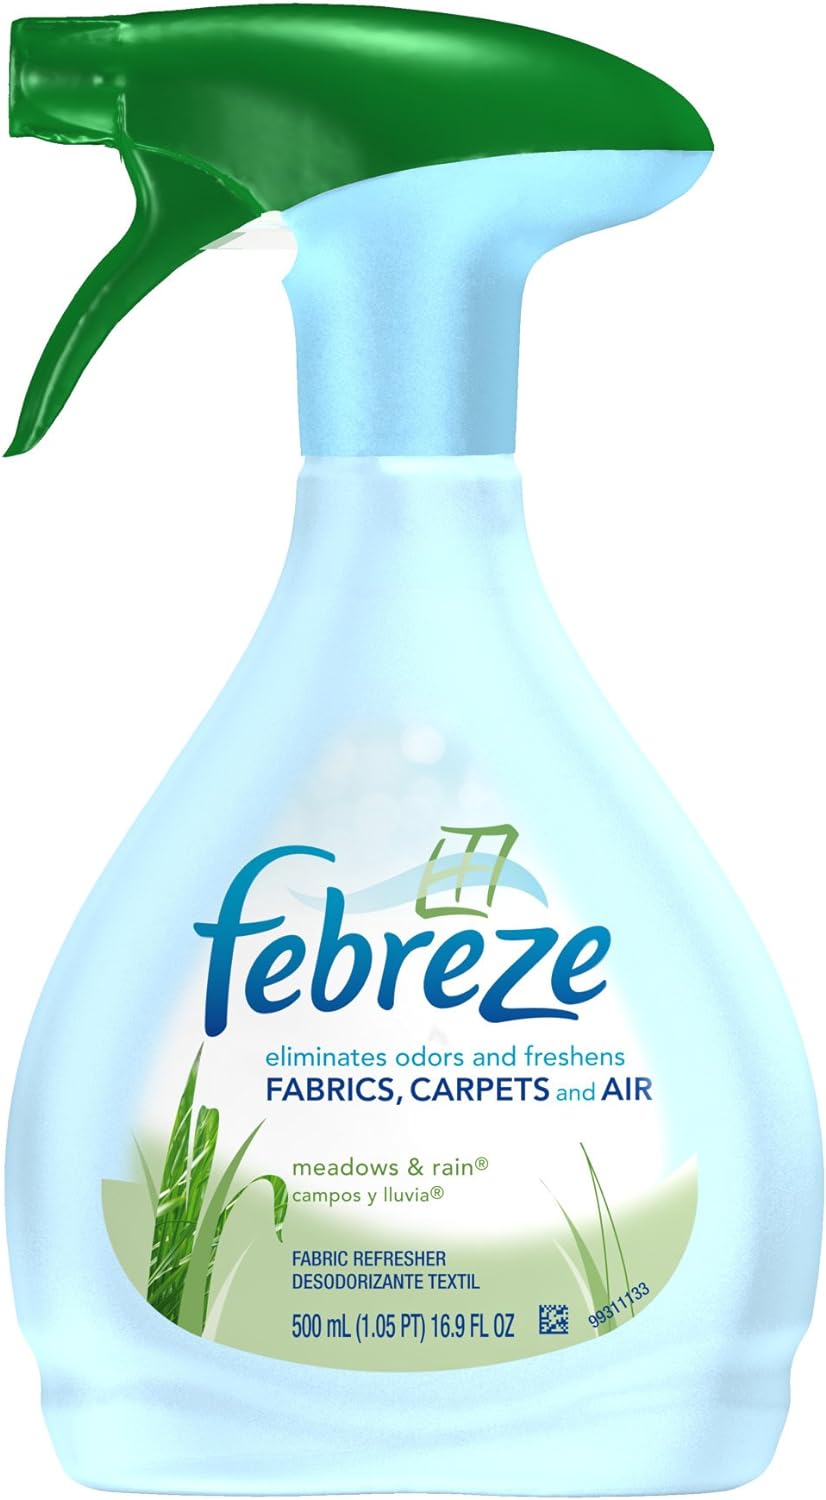 Febreze Meadows & Rain Fabric Refresher, 16.9-Ounce : Everything Else